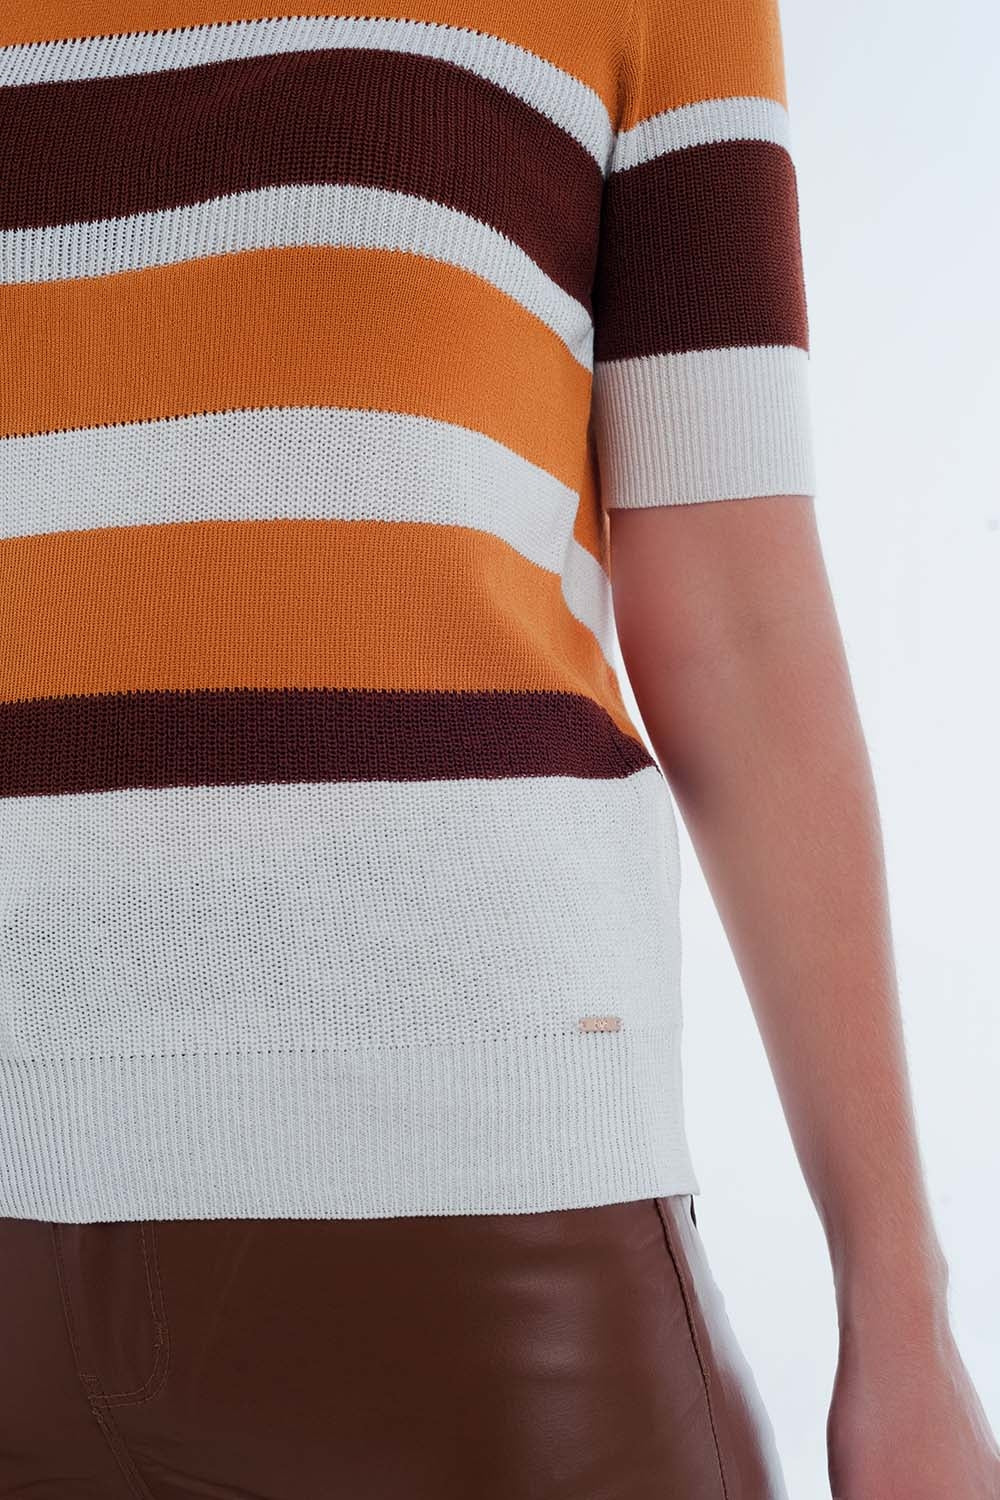 TEEK - Mustard Striped Open Knit Sweater TOPS TEEK M Small  